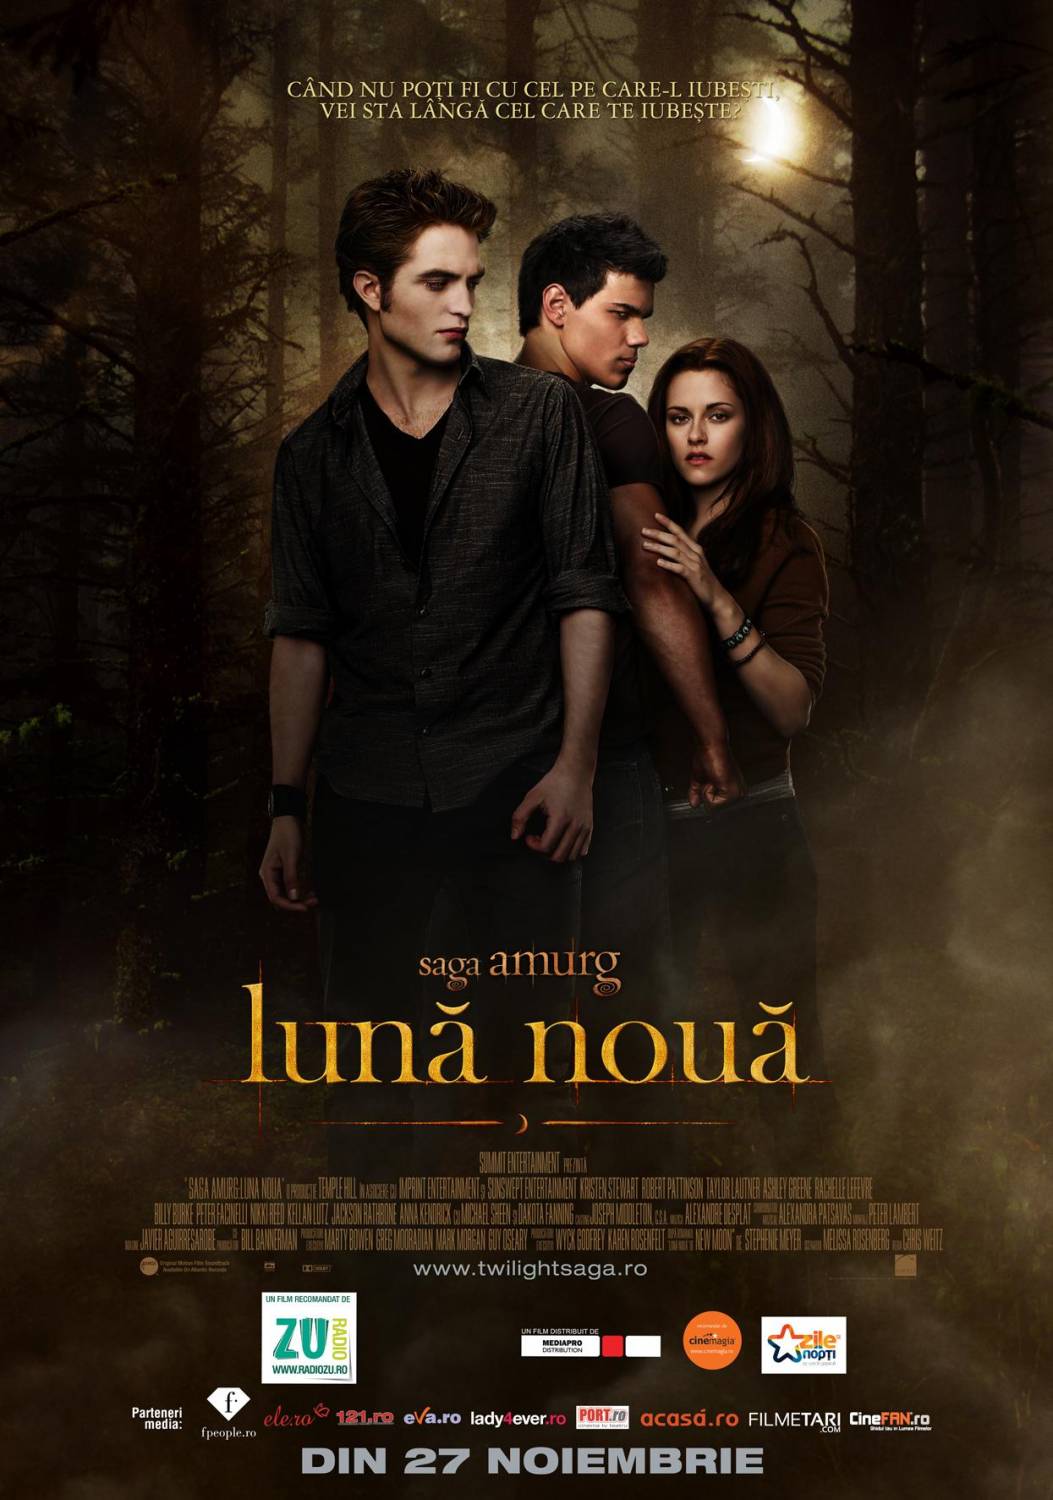 Twilight: New Moon